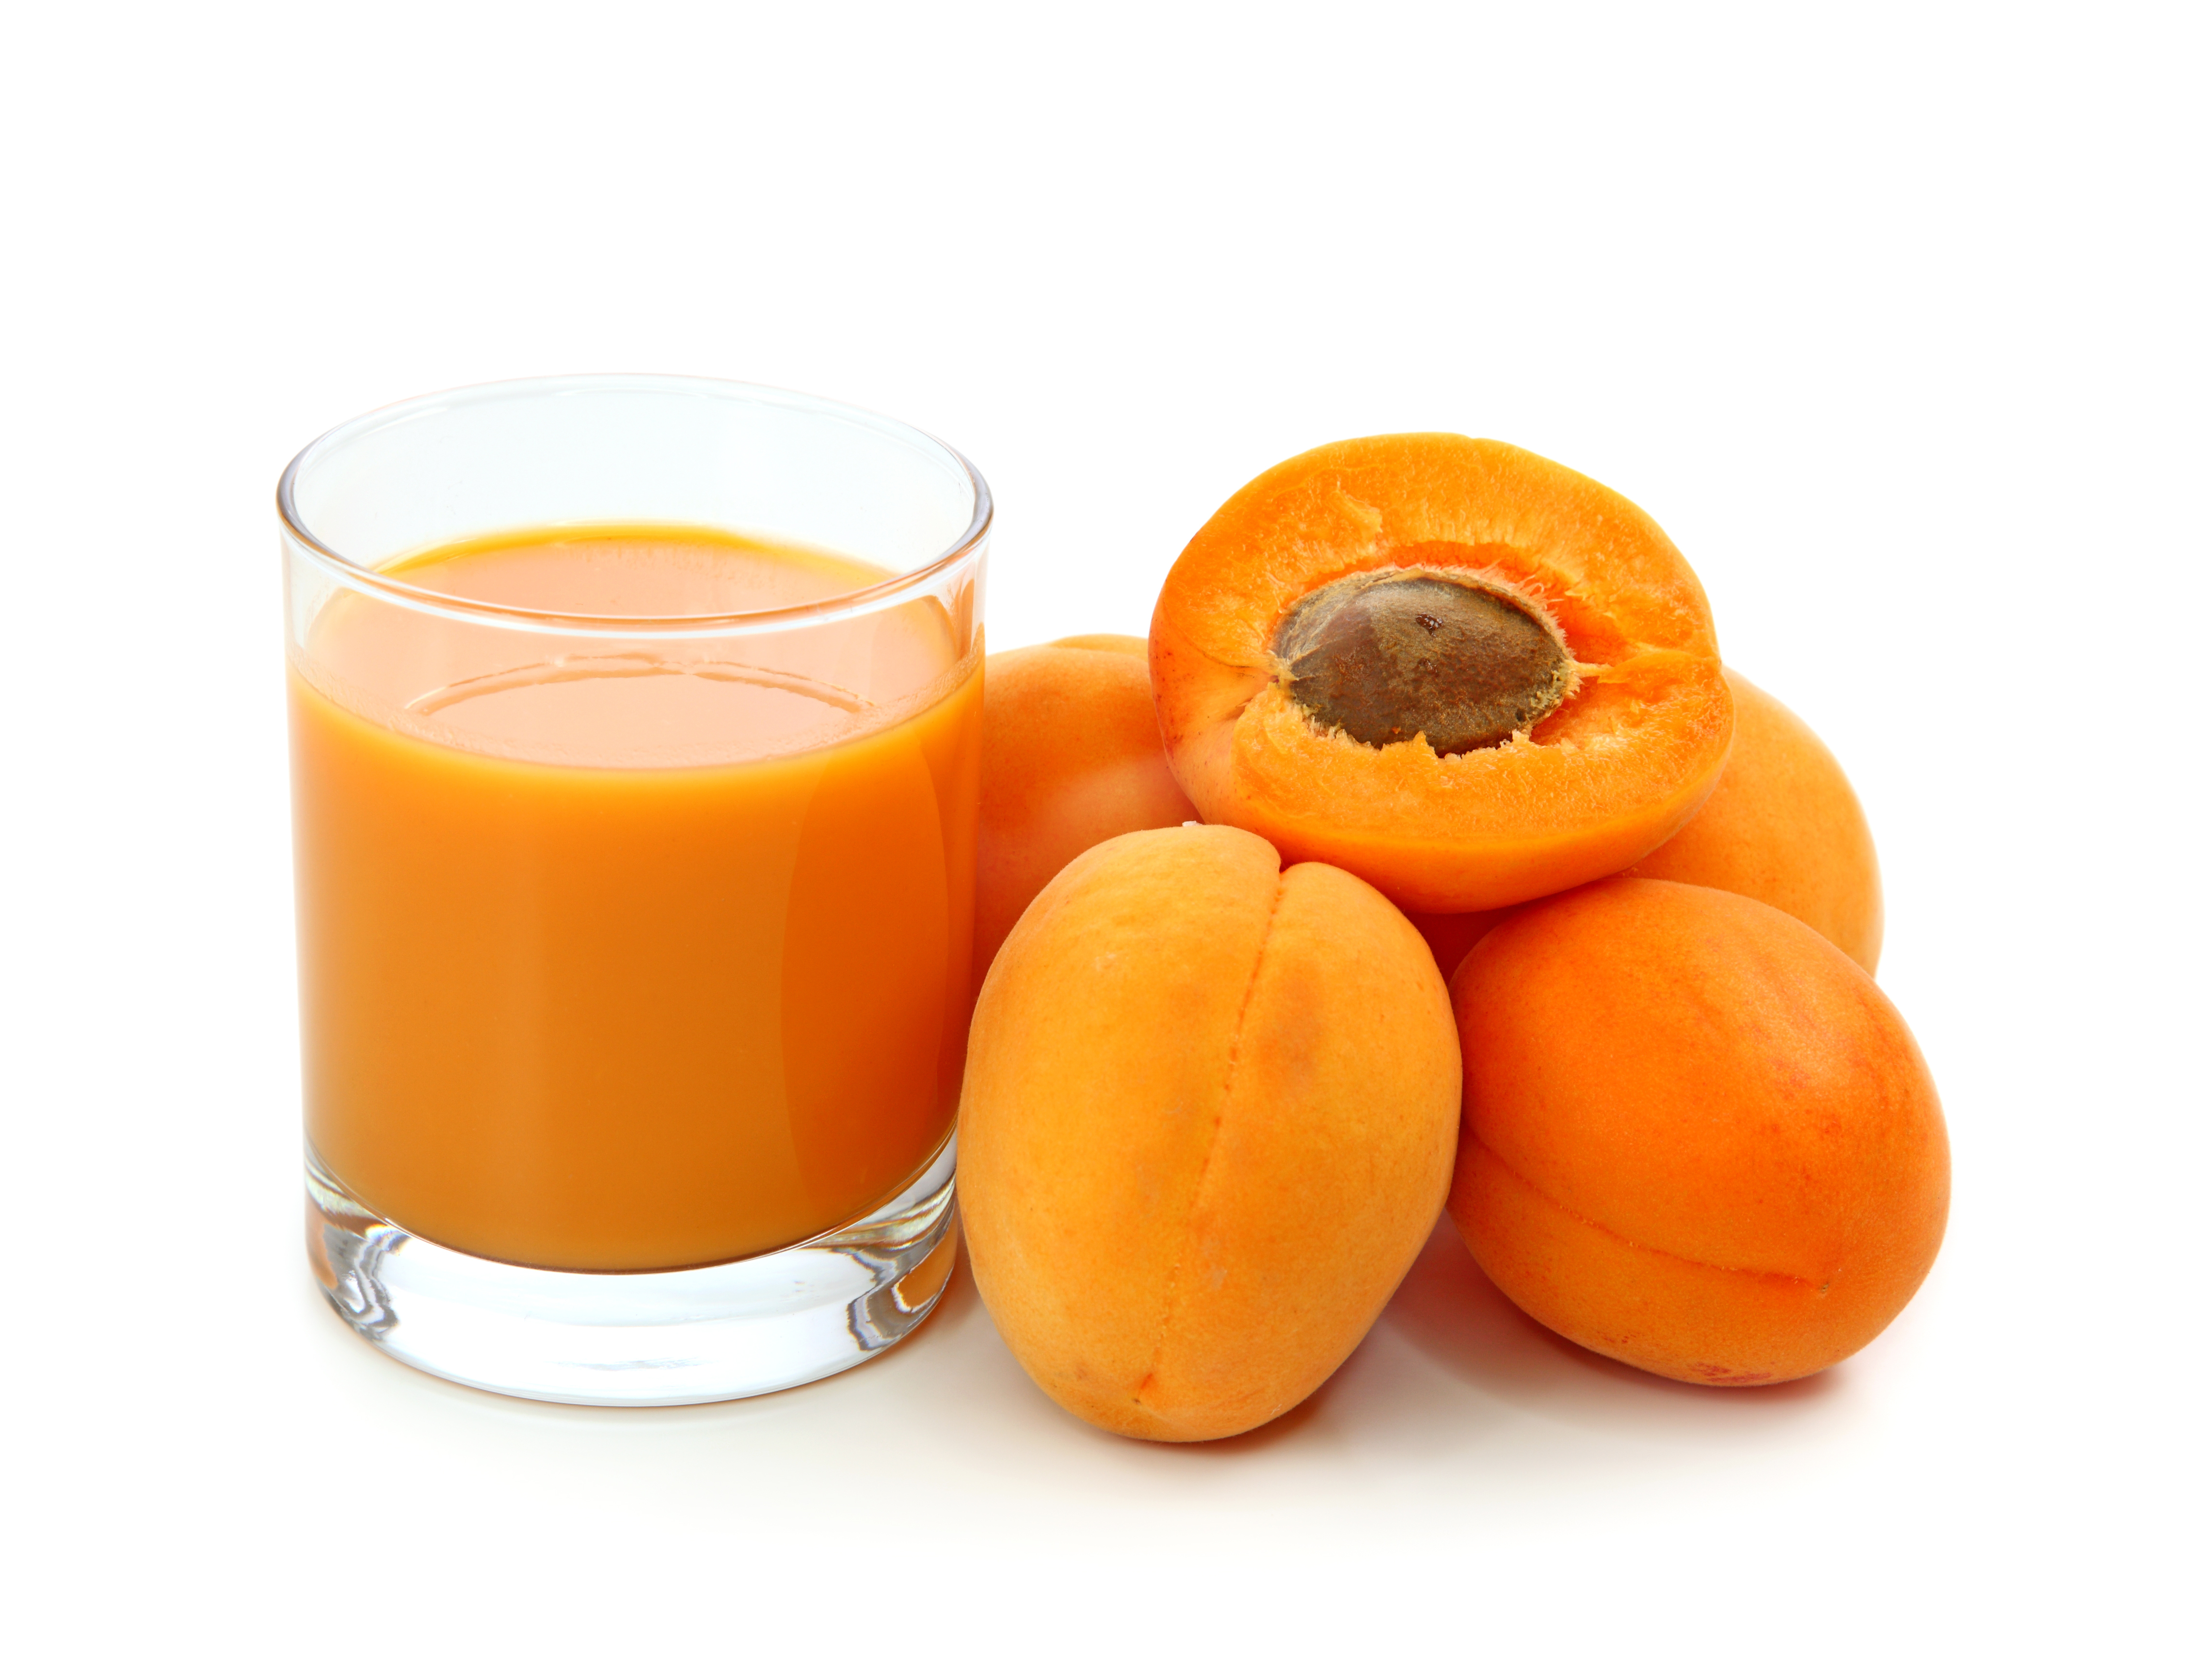 Apricot Smoothie